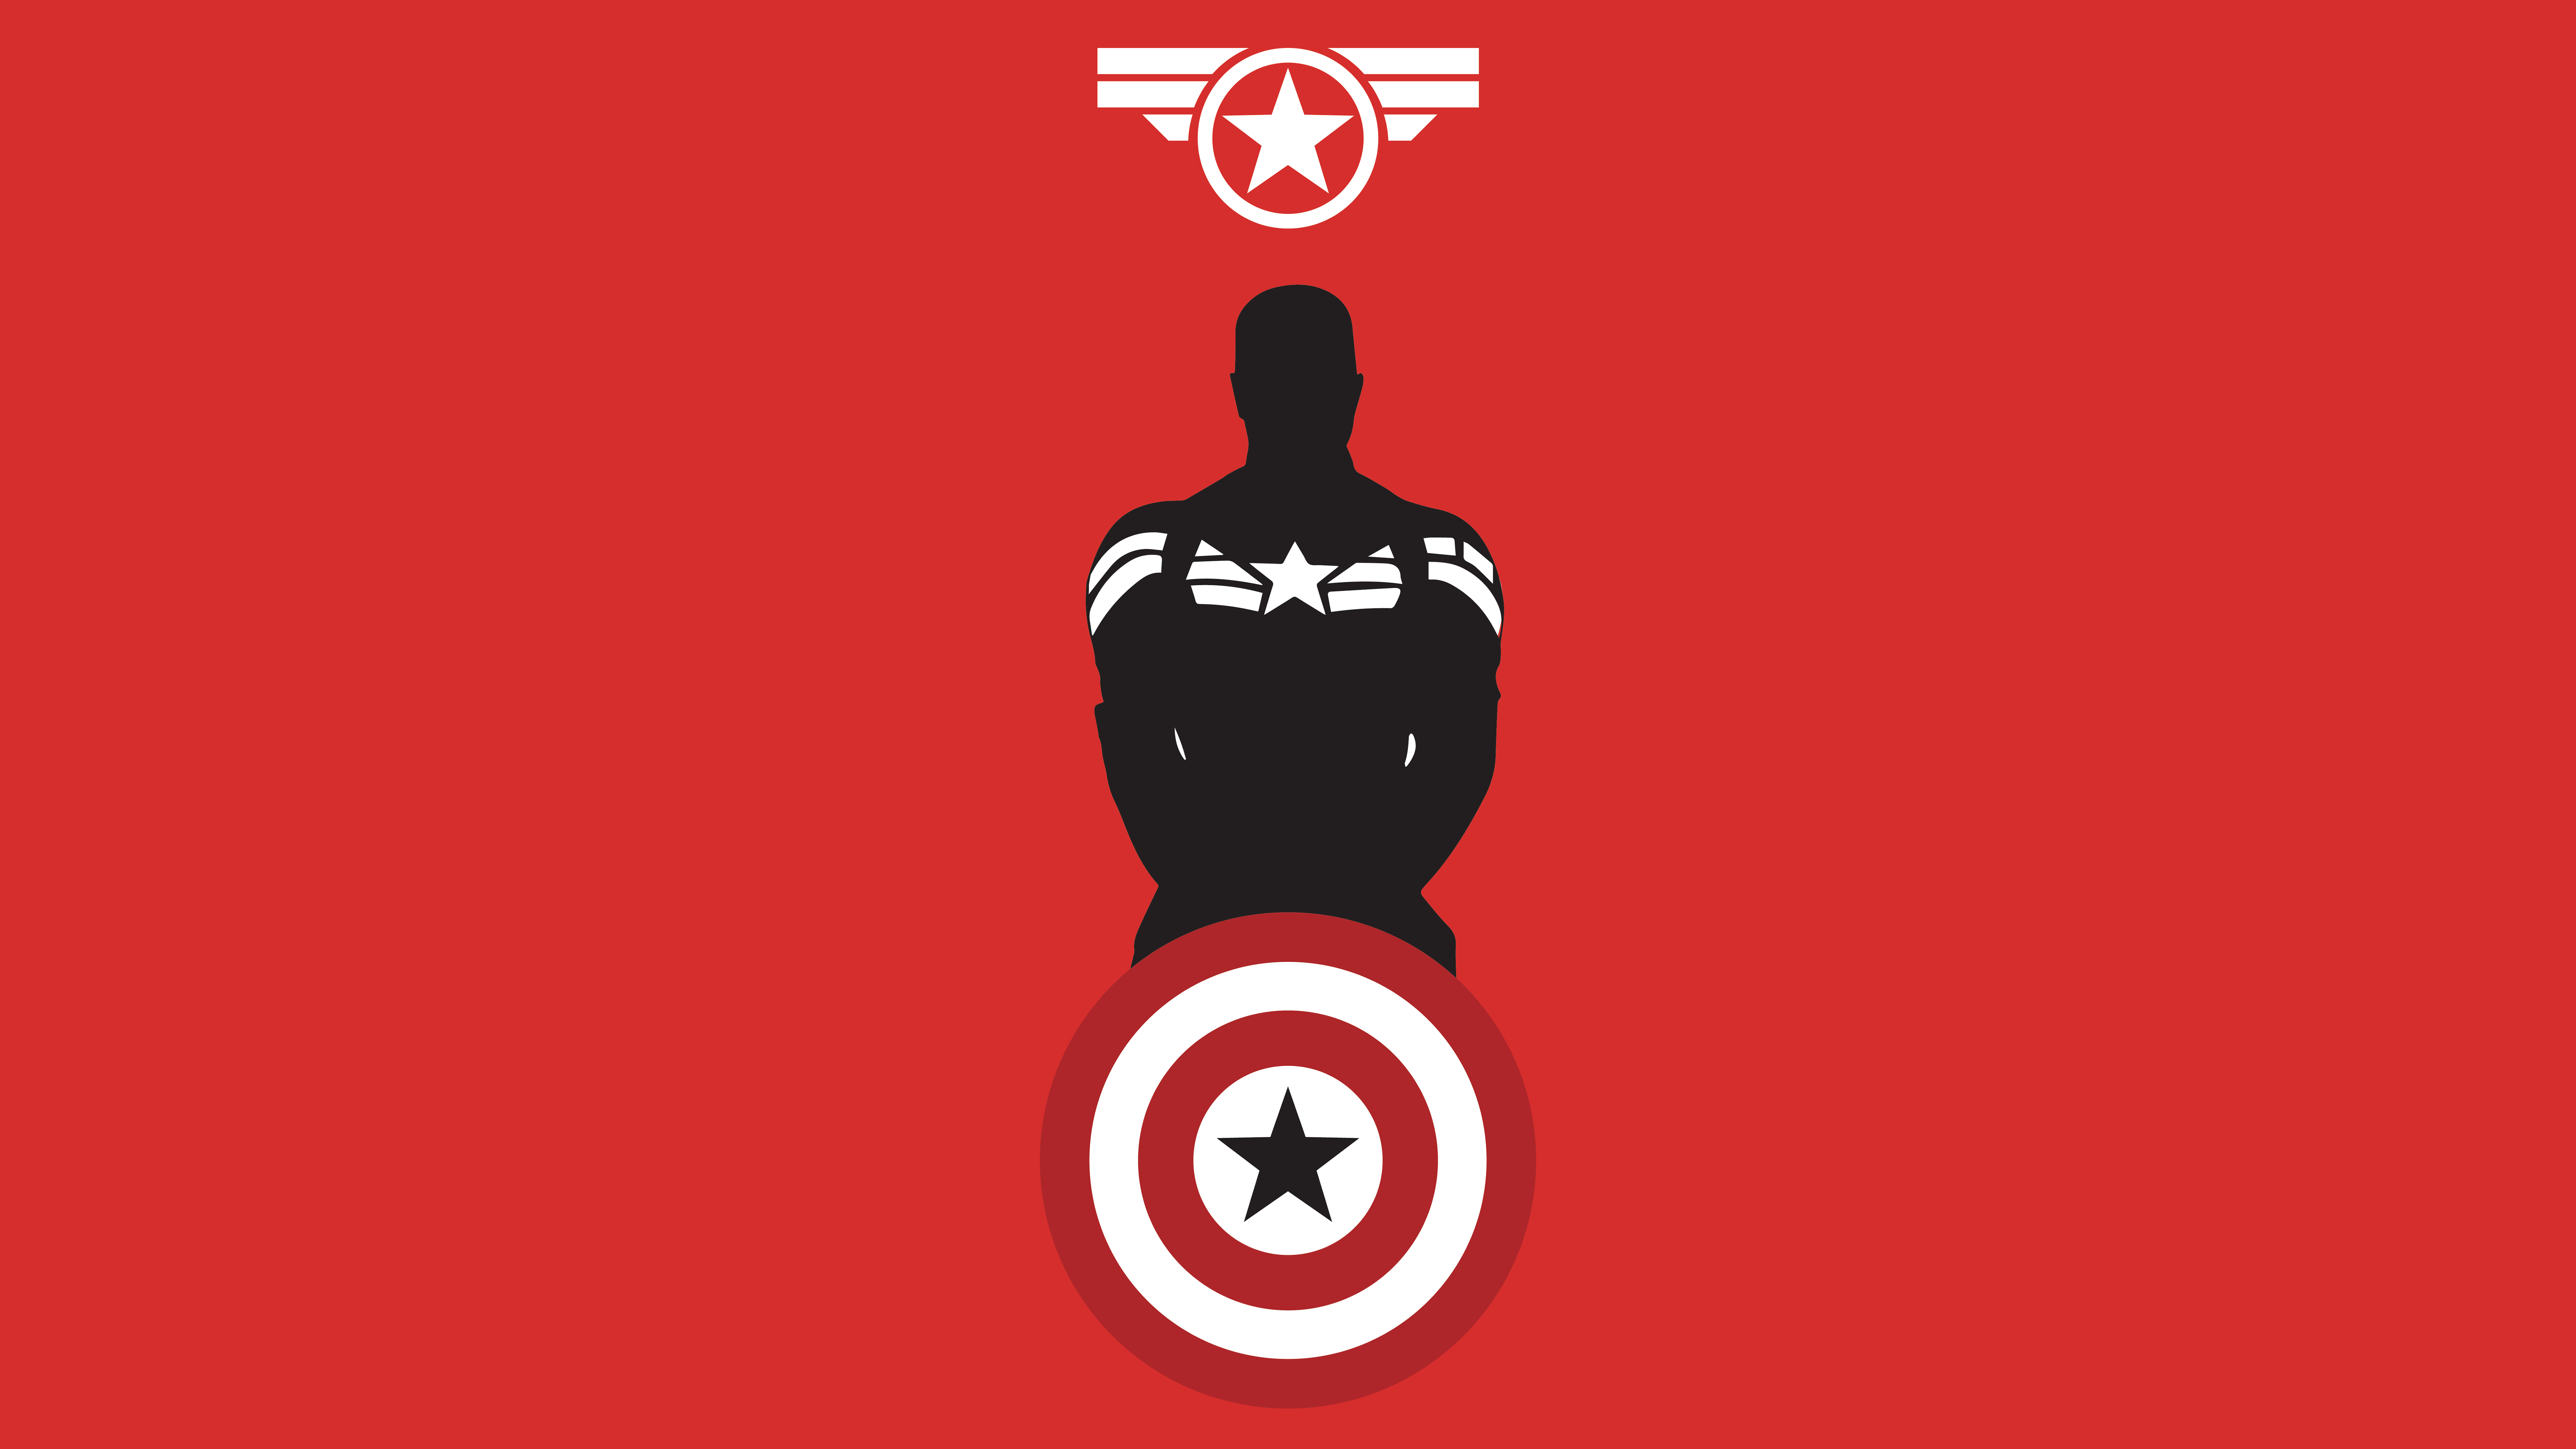 Captain America Wallpaper 4K, Marvel Superheroes, Minimal, #5794